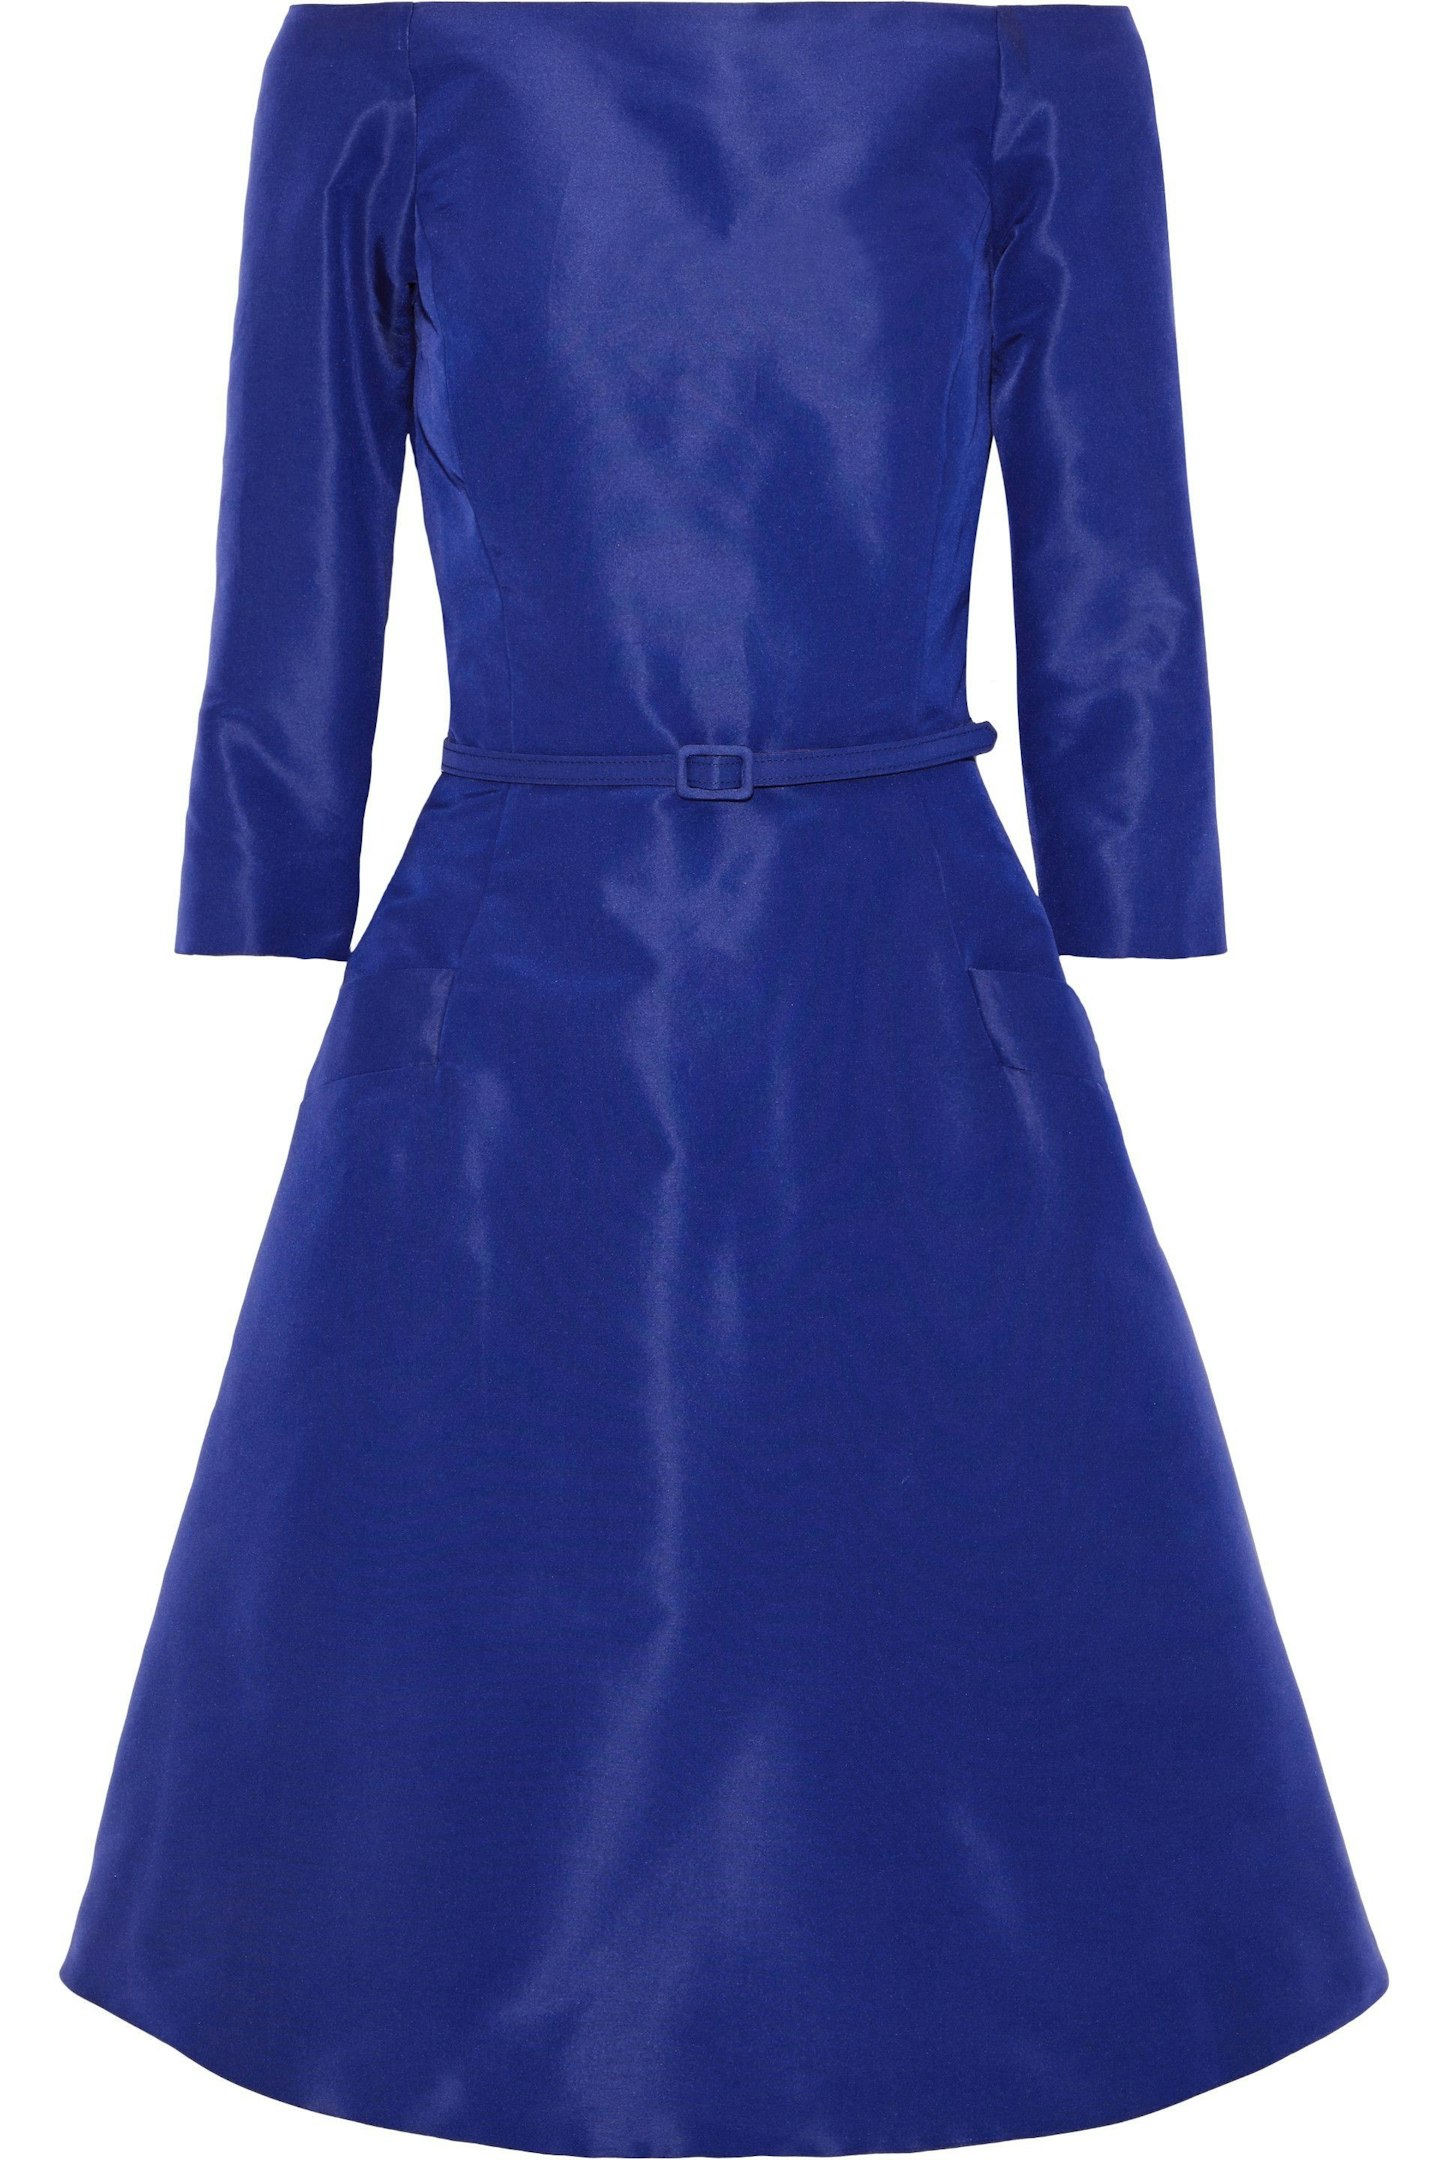 Oscar de la Renta, Blue A-line Dress, £1,095